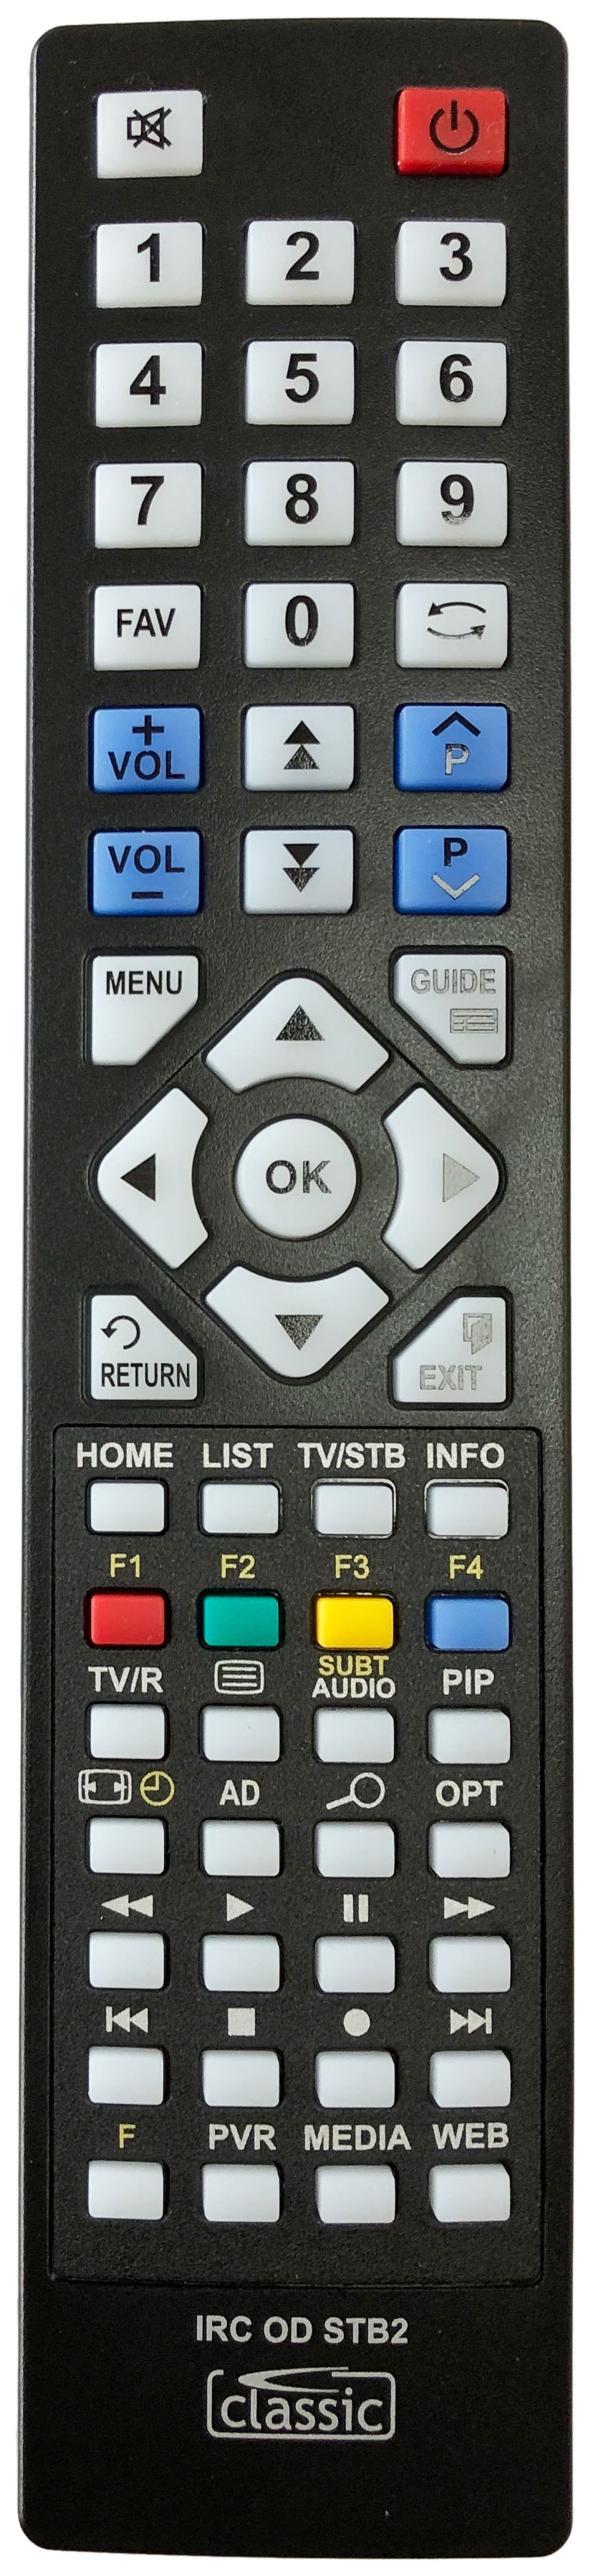 AKURA AVT8010 Remote Control